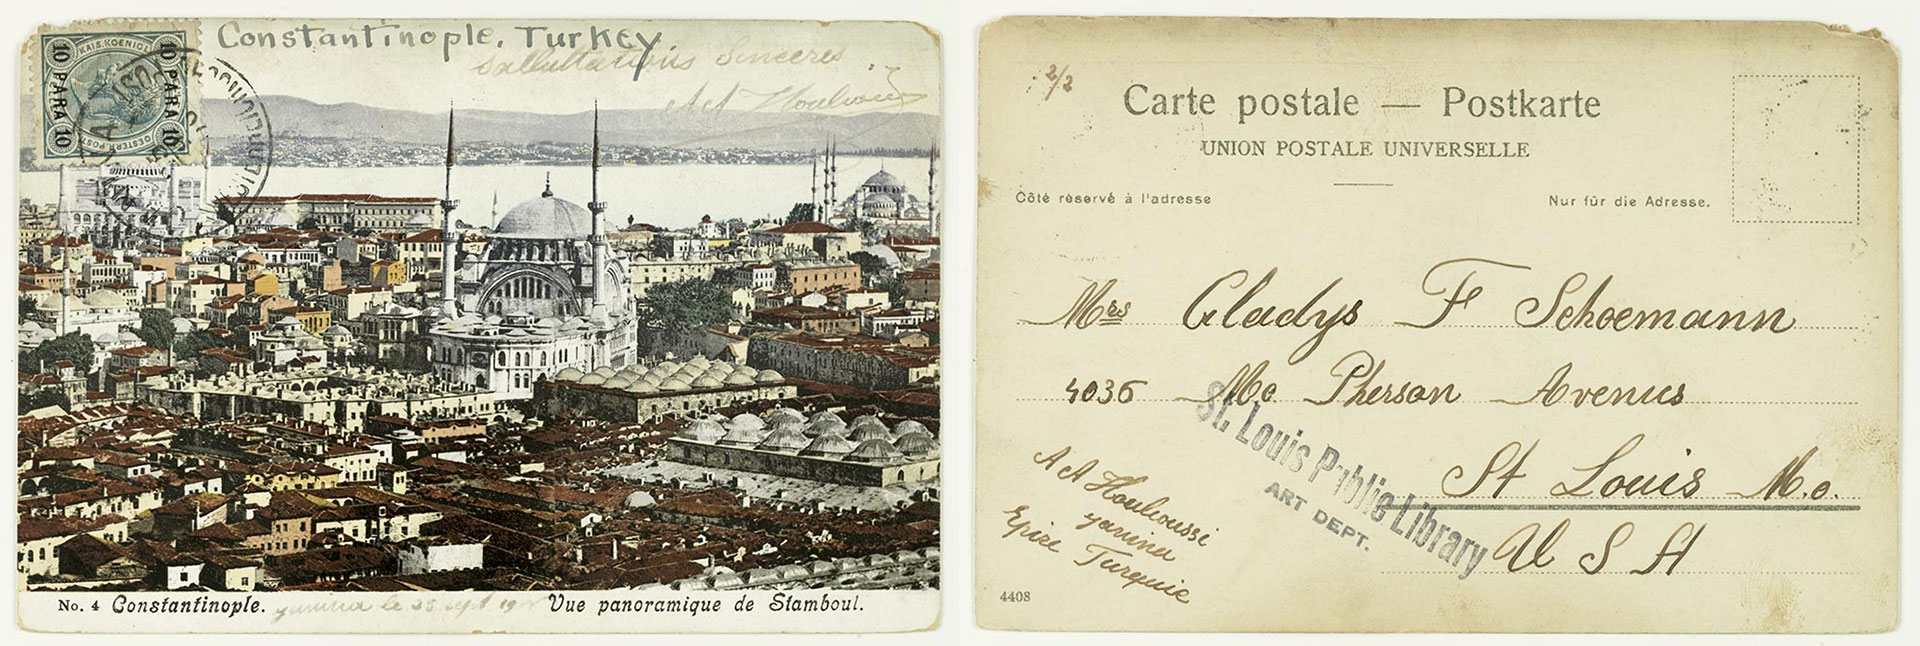 Constantinople, Bue panoramique de Stamboul ca. 1900